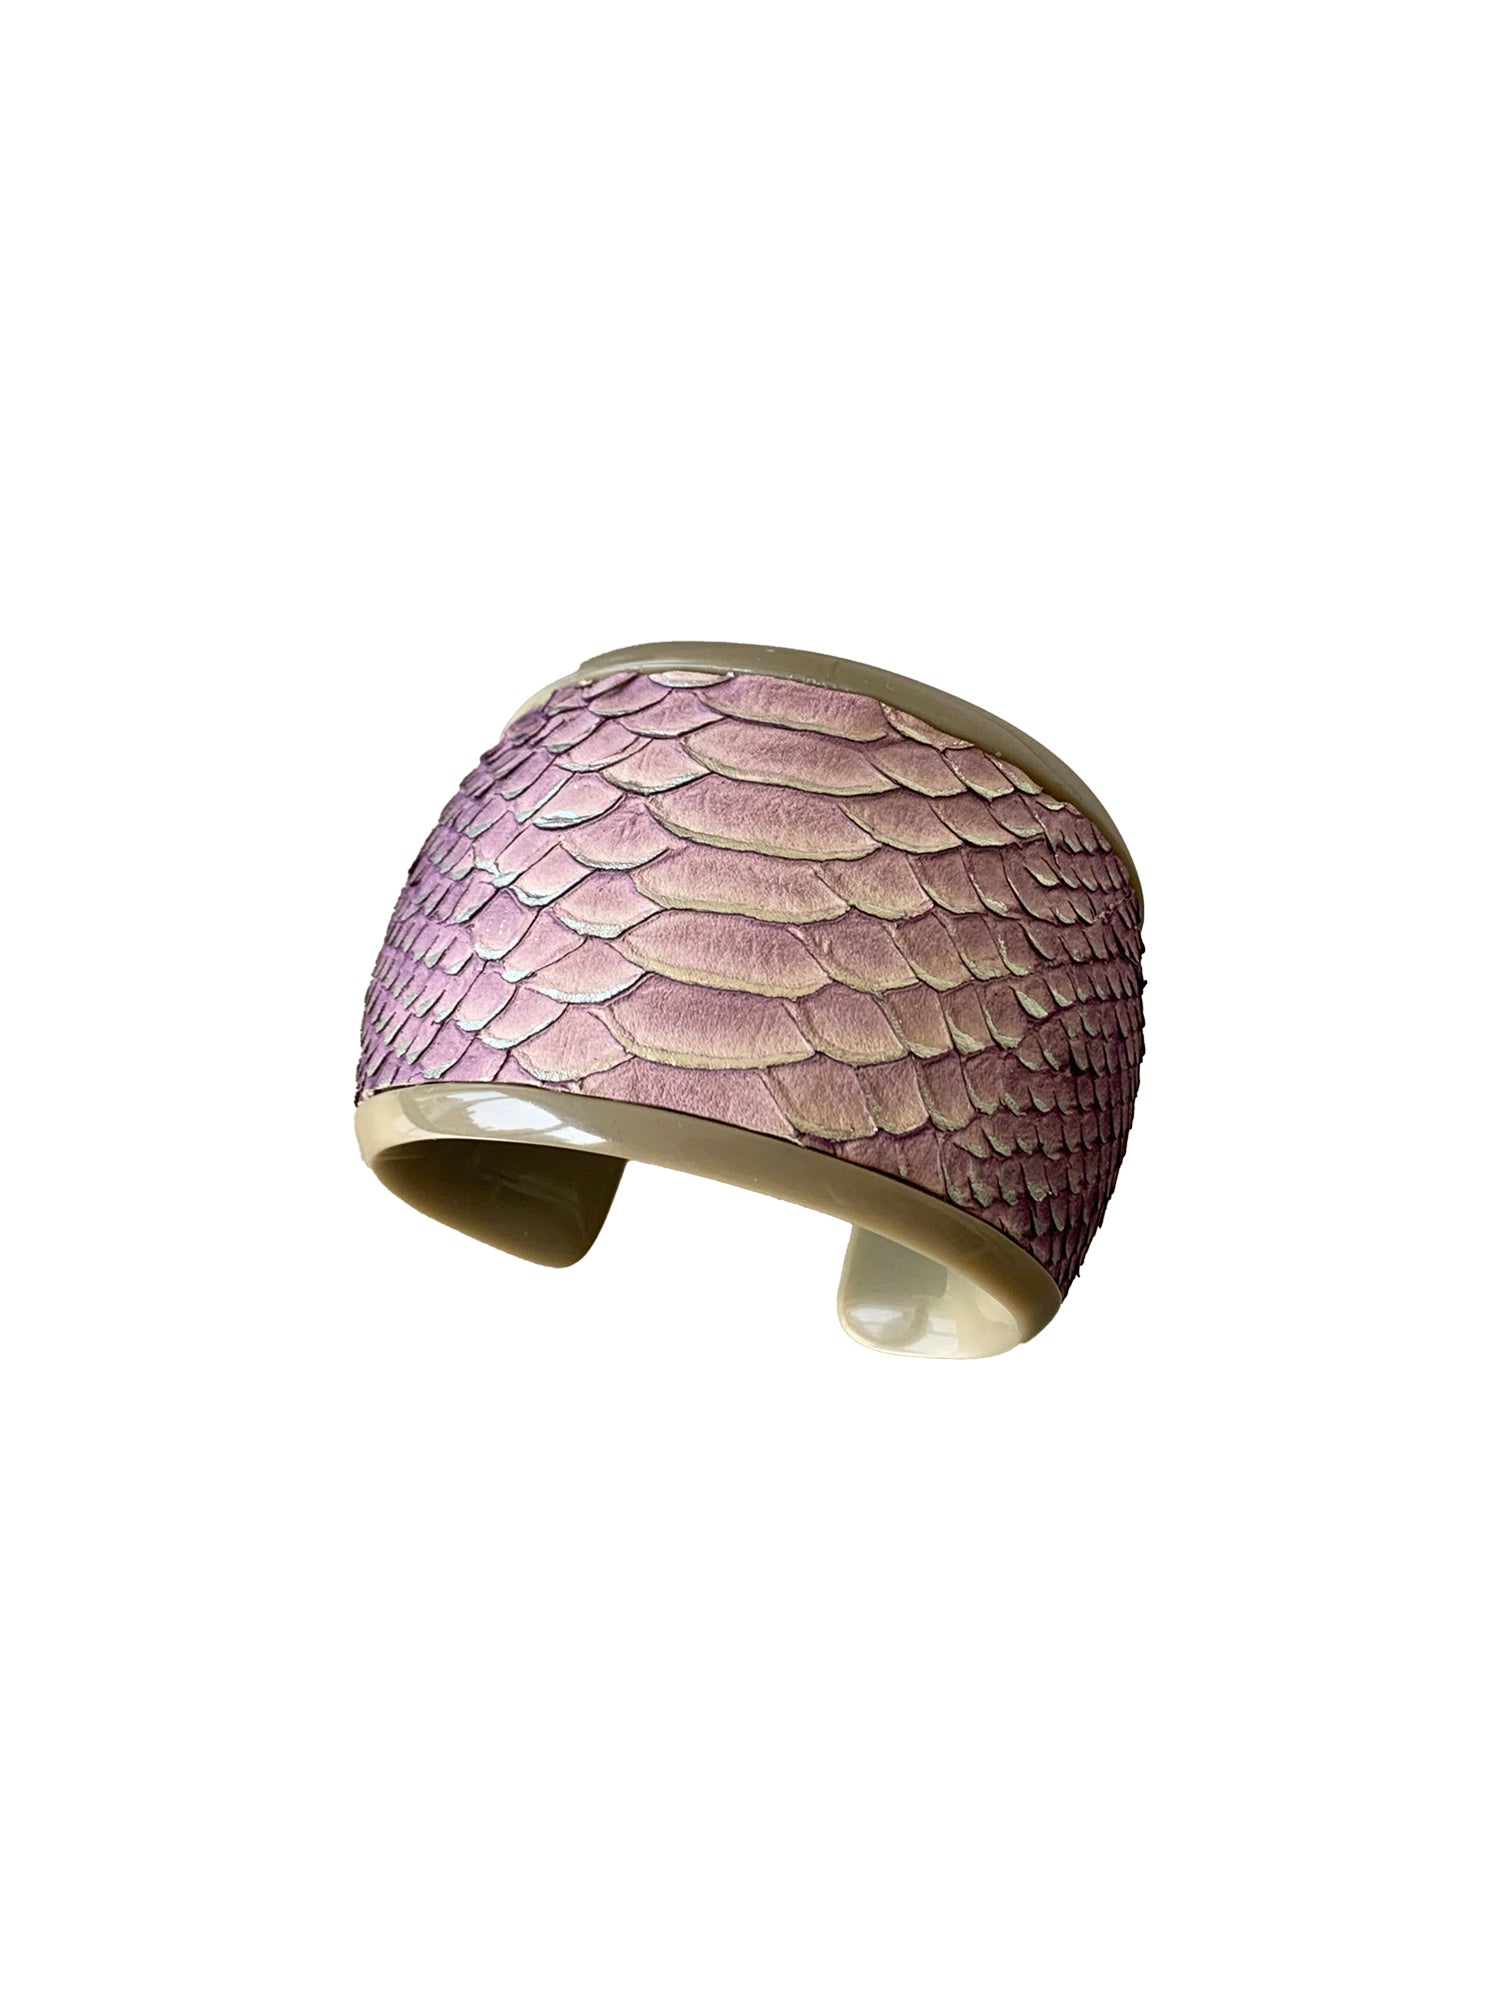 Resin Cuff Bracelet - Khaki / Purple